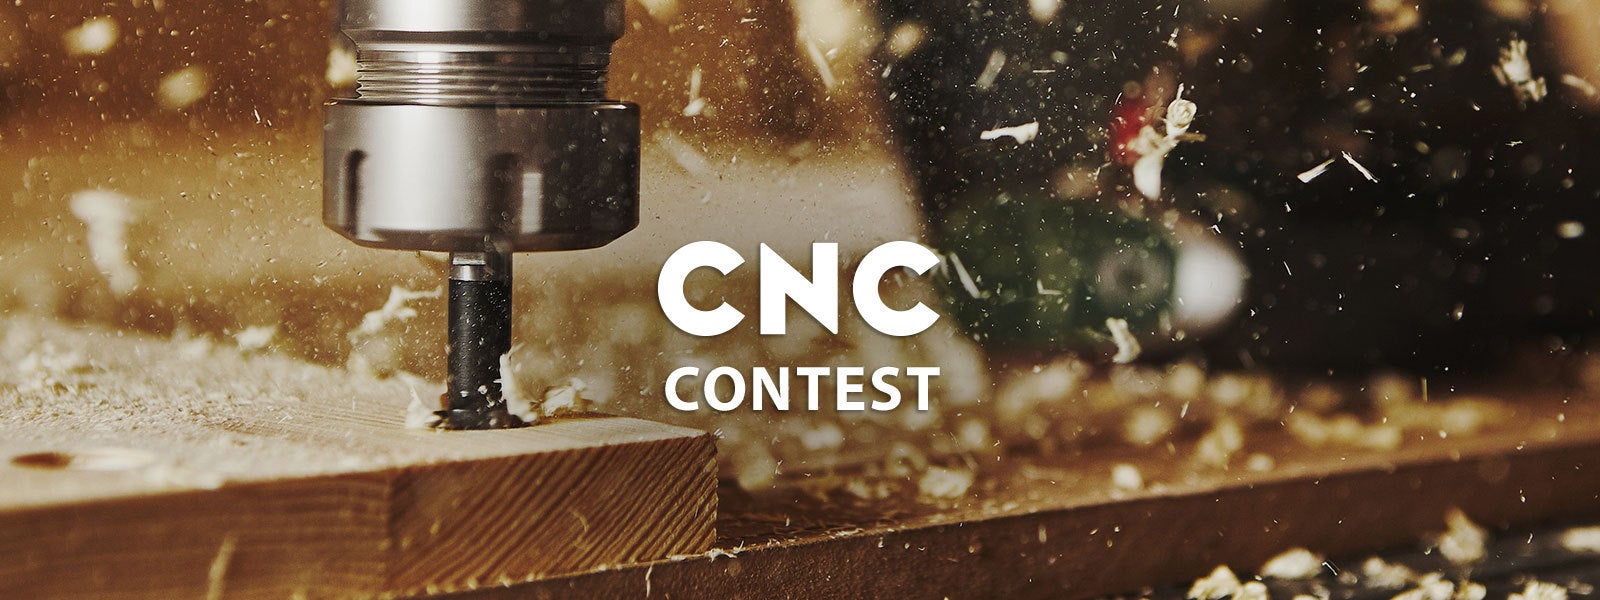 CNC Contest 2020